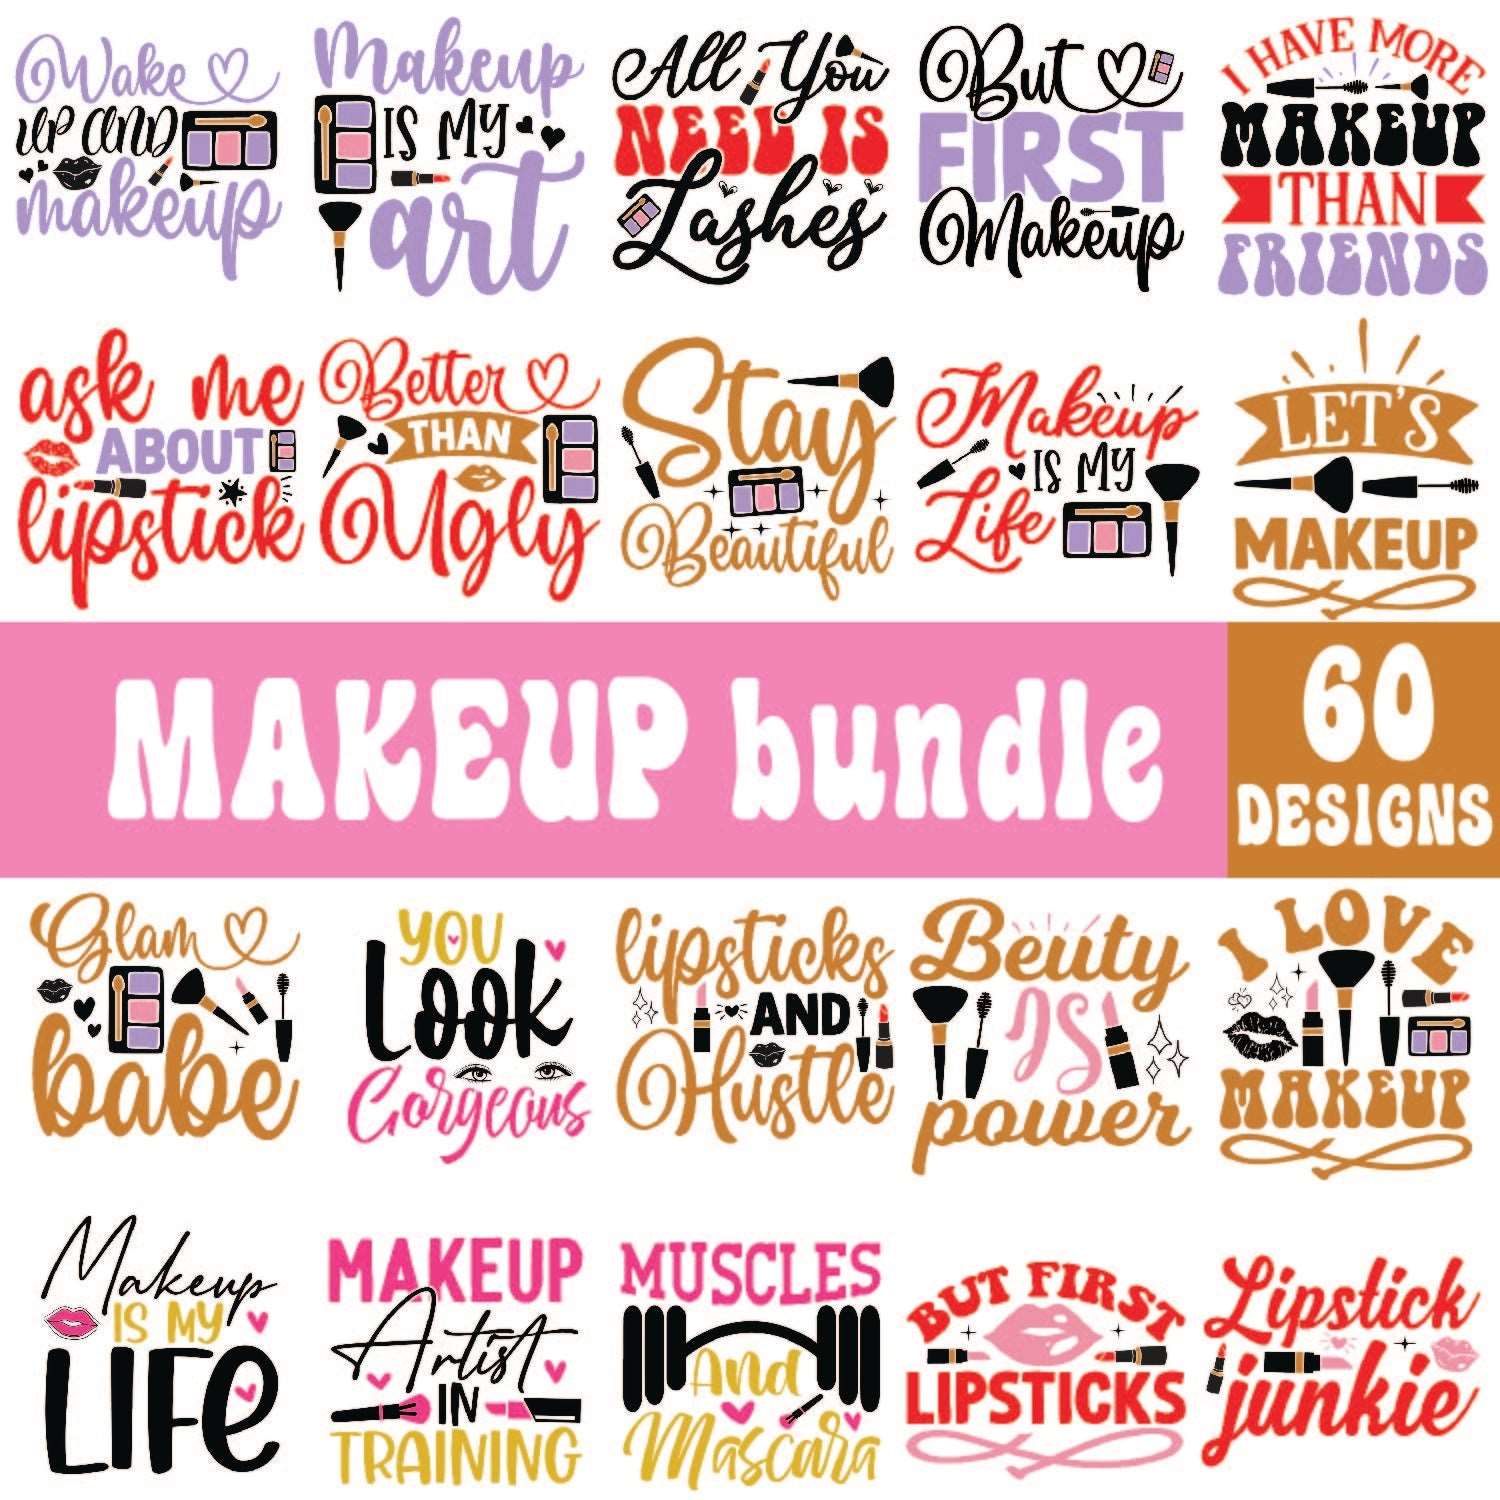 Fashion Lipstick SVG Bundle